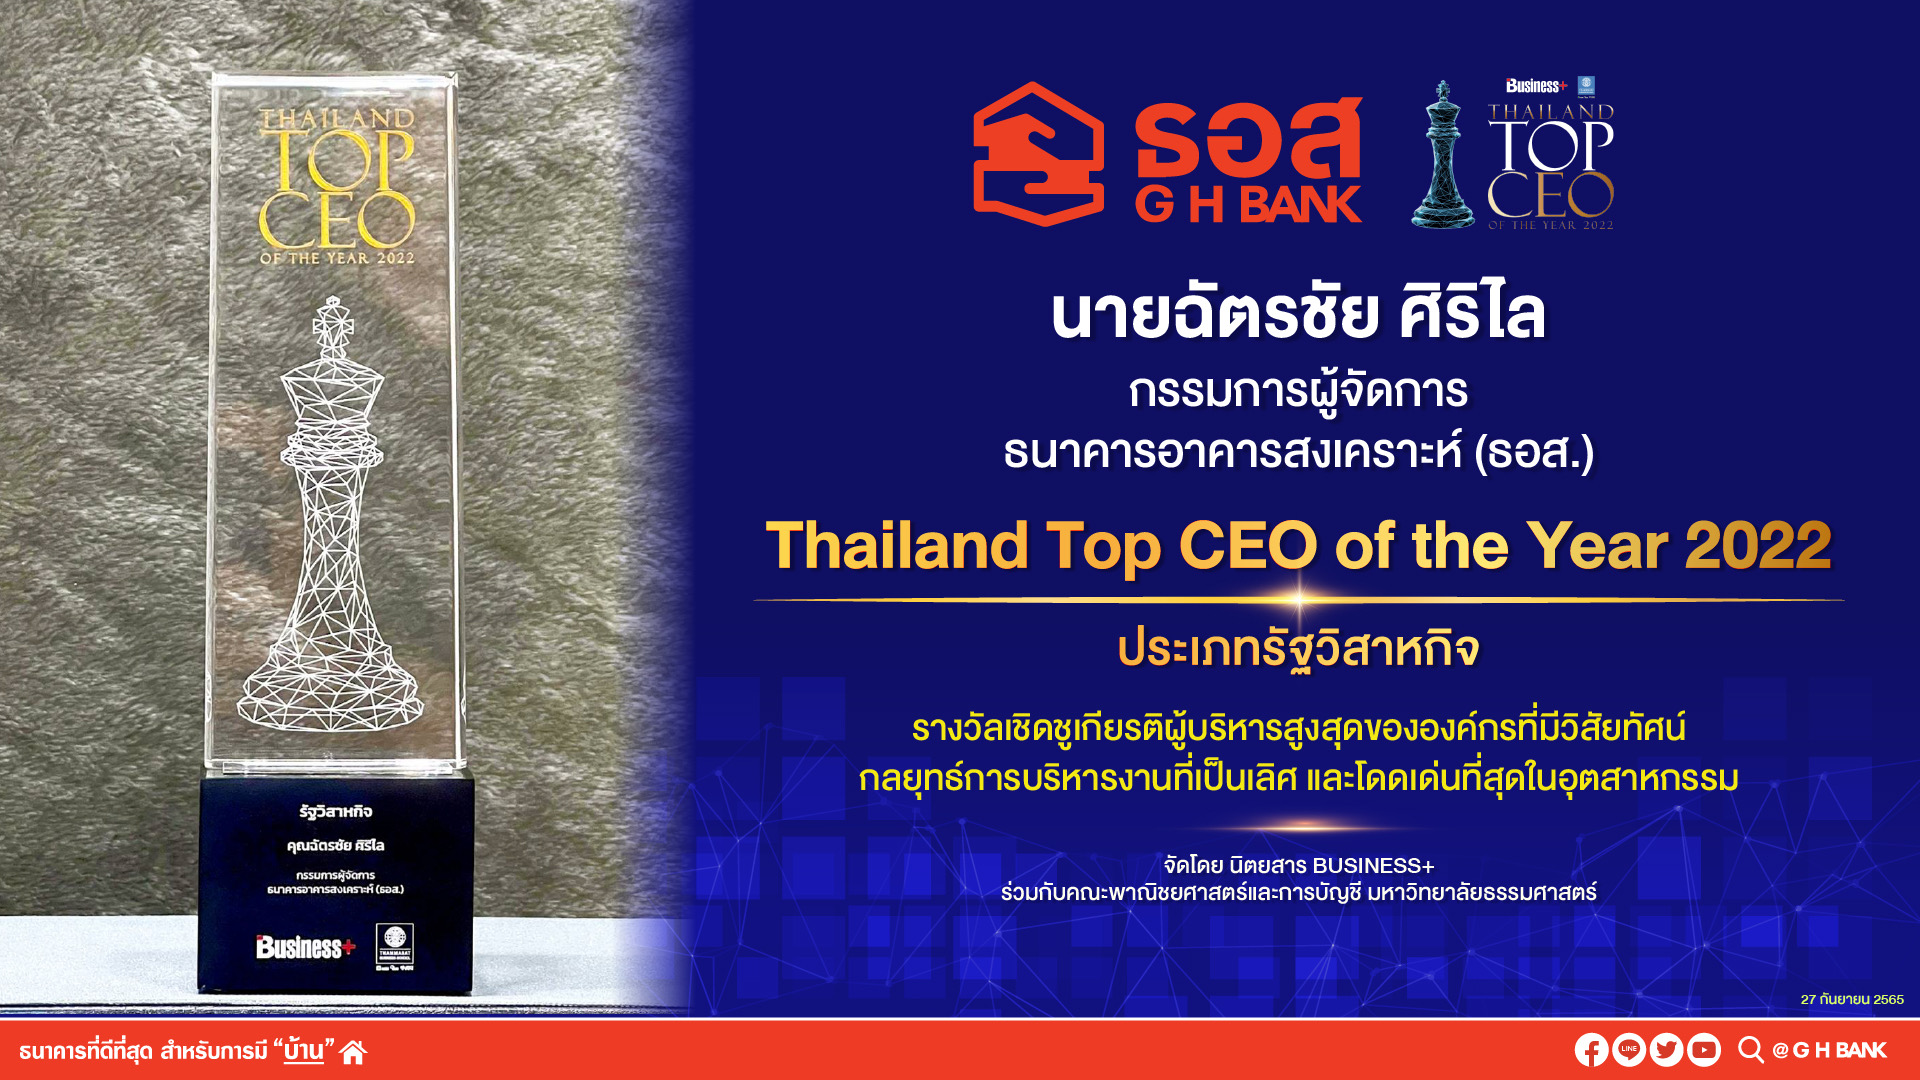 MD ธอส. รับรางวัล Thailand Top CEO of the Year 2022 ประเภทรัฐวิสาหกิจ